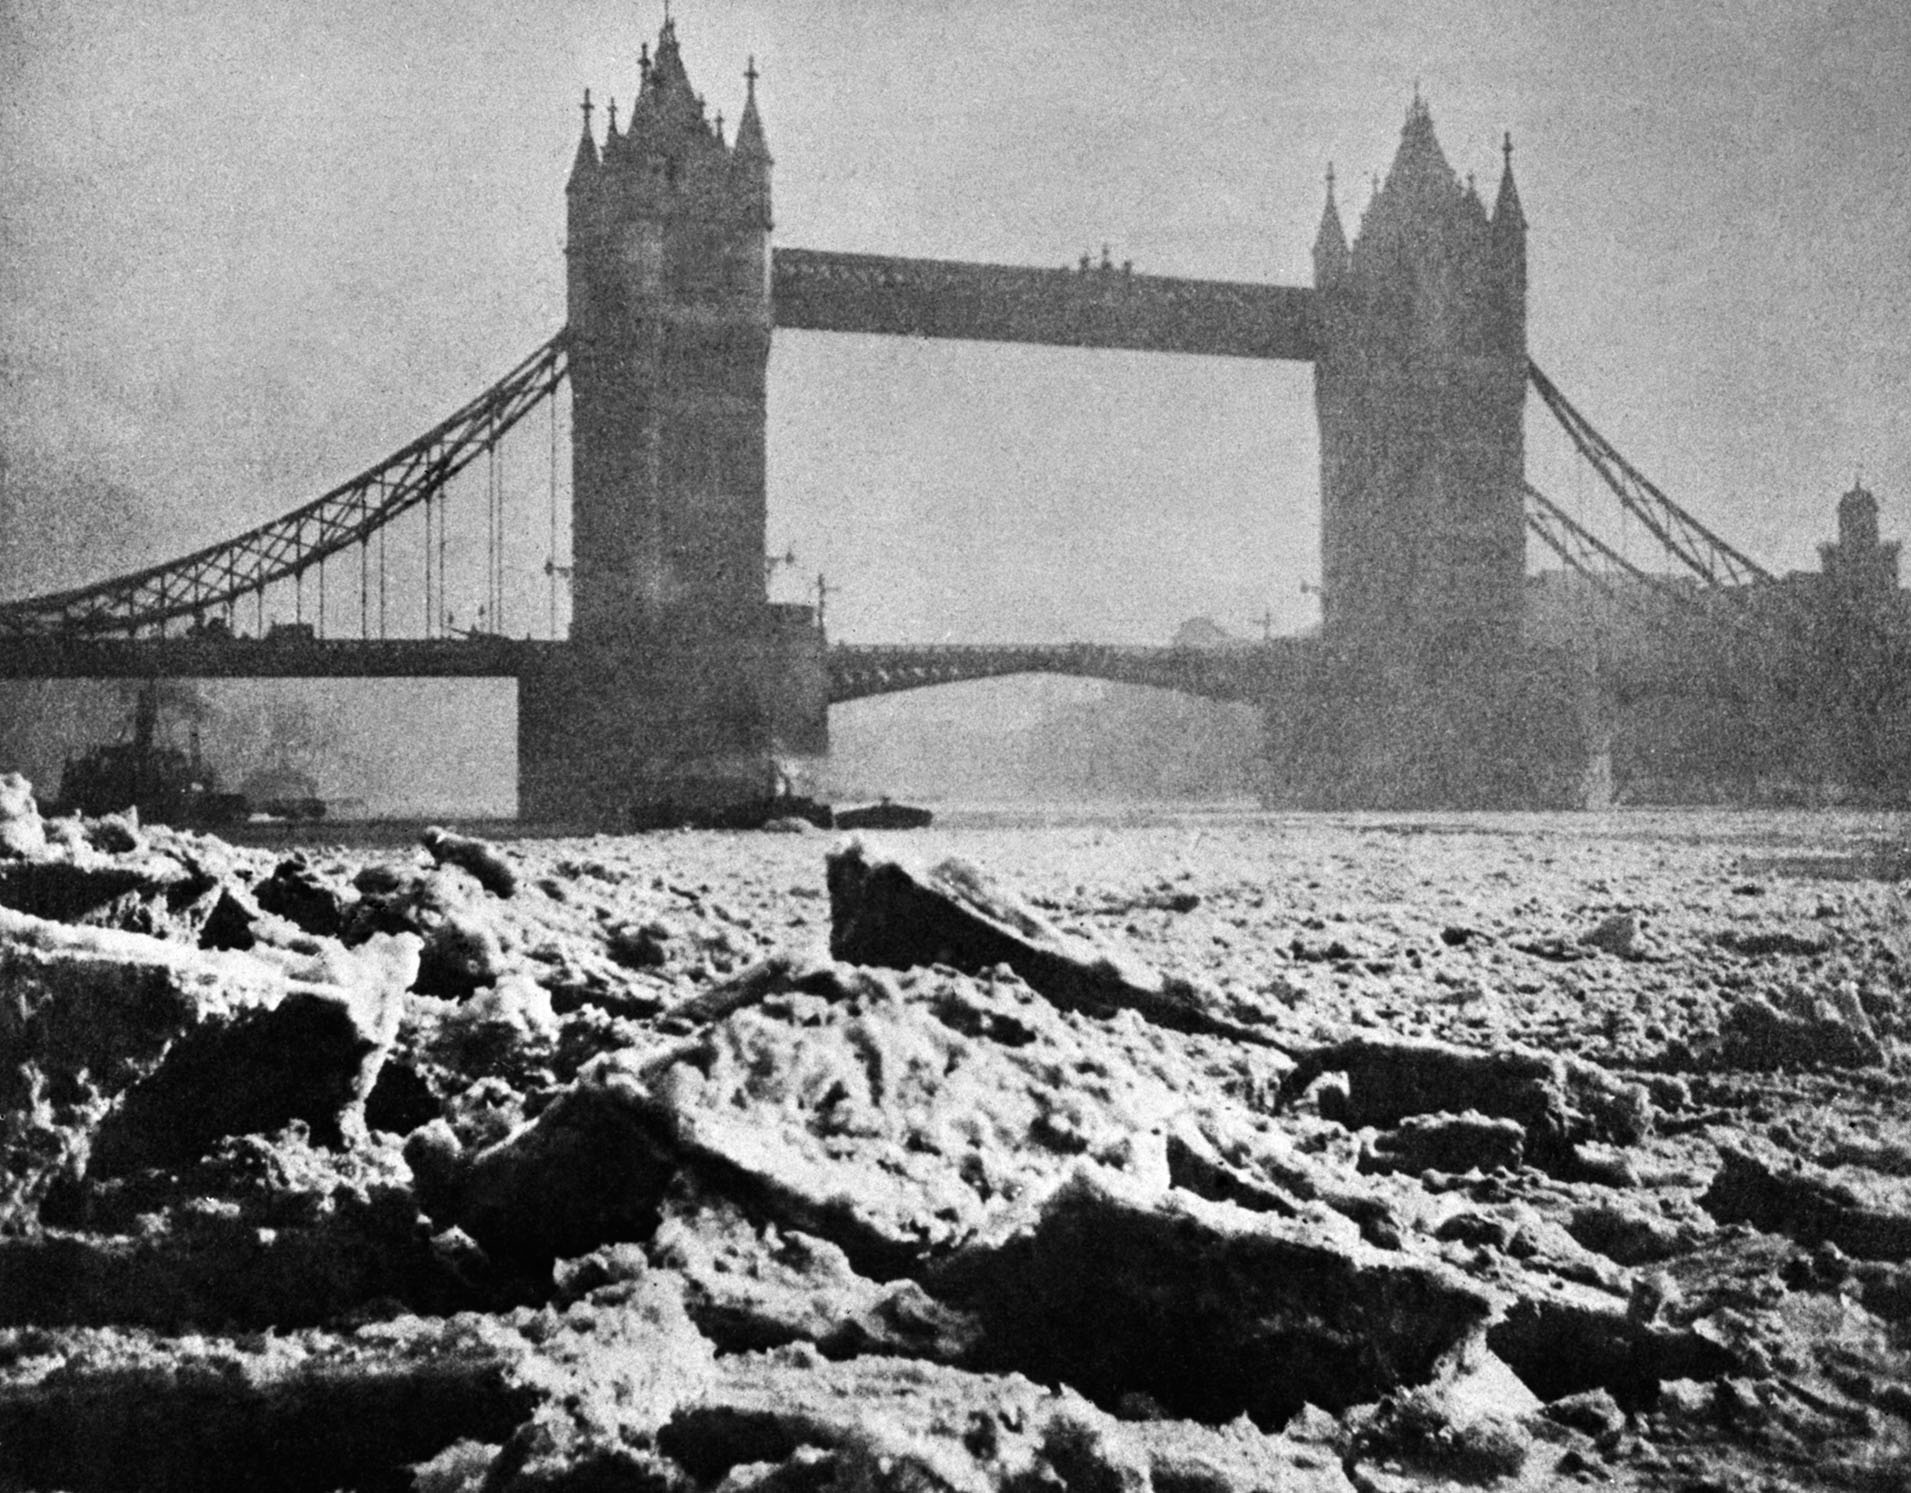 The frozen River Thames at Tower Bridge, 1895